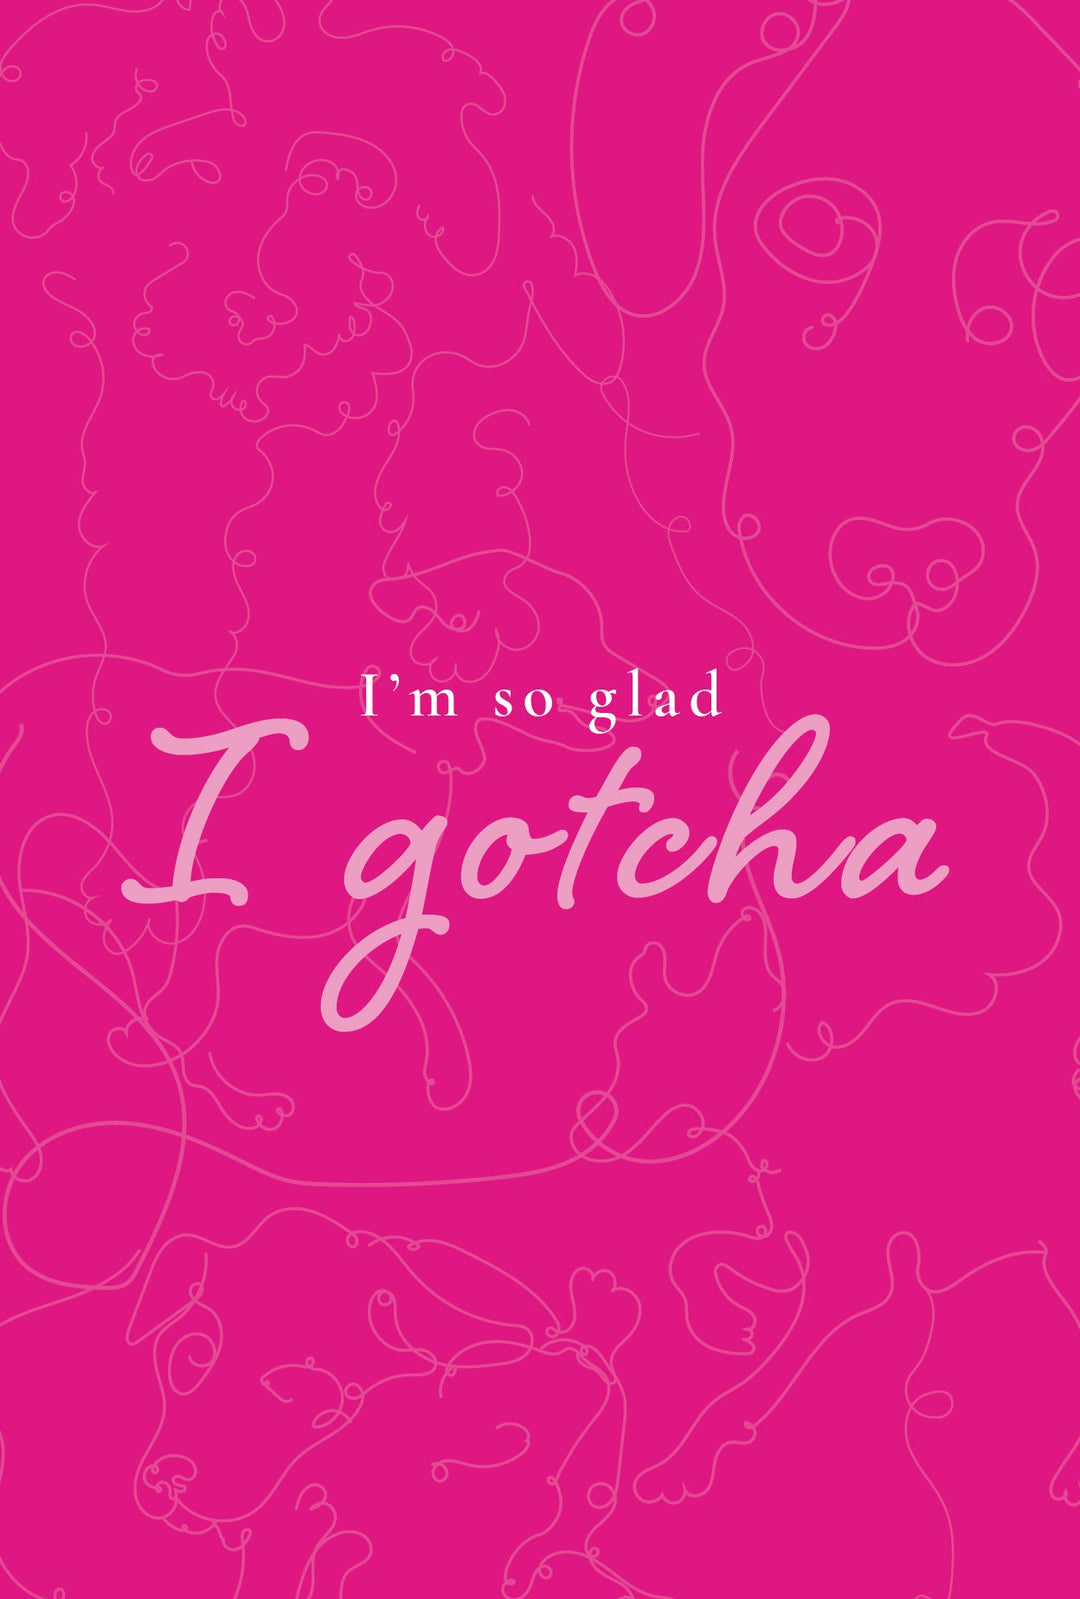 Gotcha Greeting Card Dog Line Art - New Promo Gift w/ Purchase